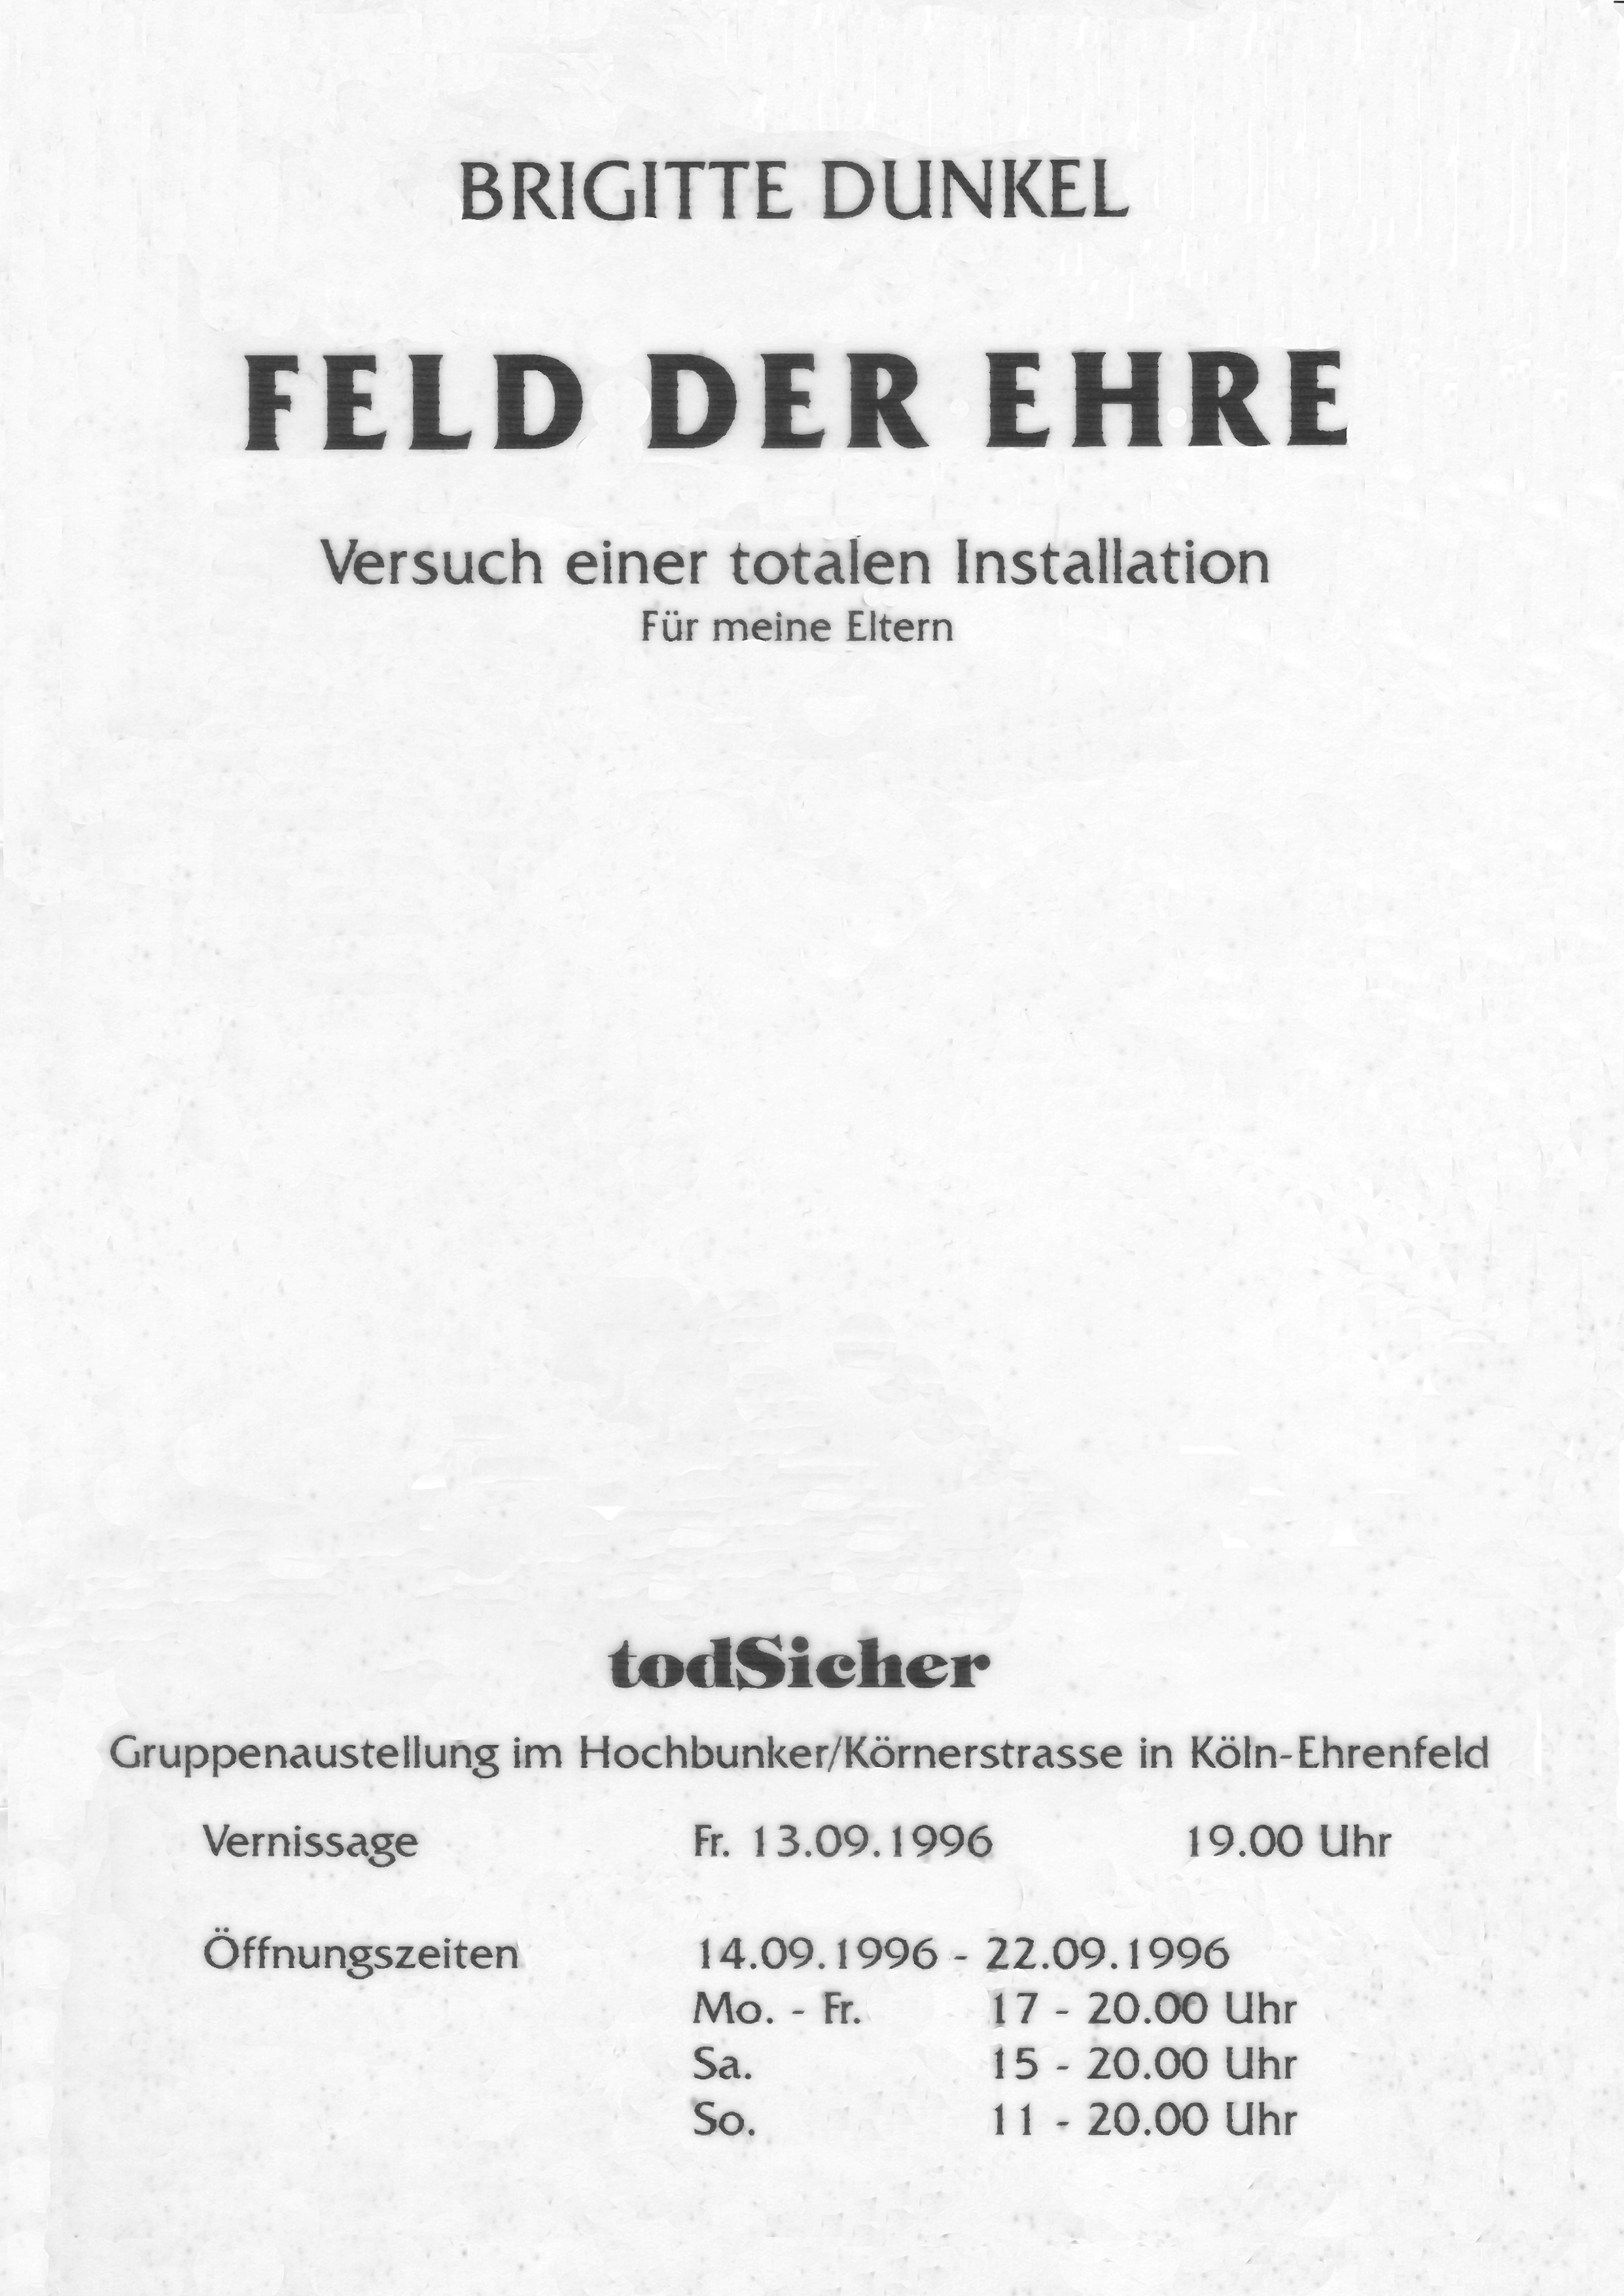 FIELD OF HONOR, 1996 / temporary, site-specific installation for group exhibition ‚todSicher‘ - Ehrenfelder Kunstverein e.V. / Cologne (GER), Location: Hochbunker Körnerstrasse - Invitation 